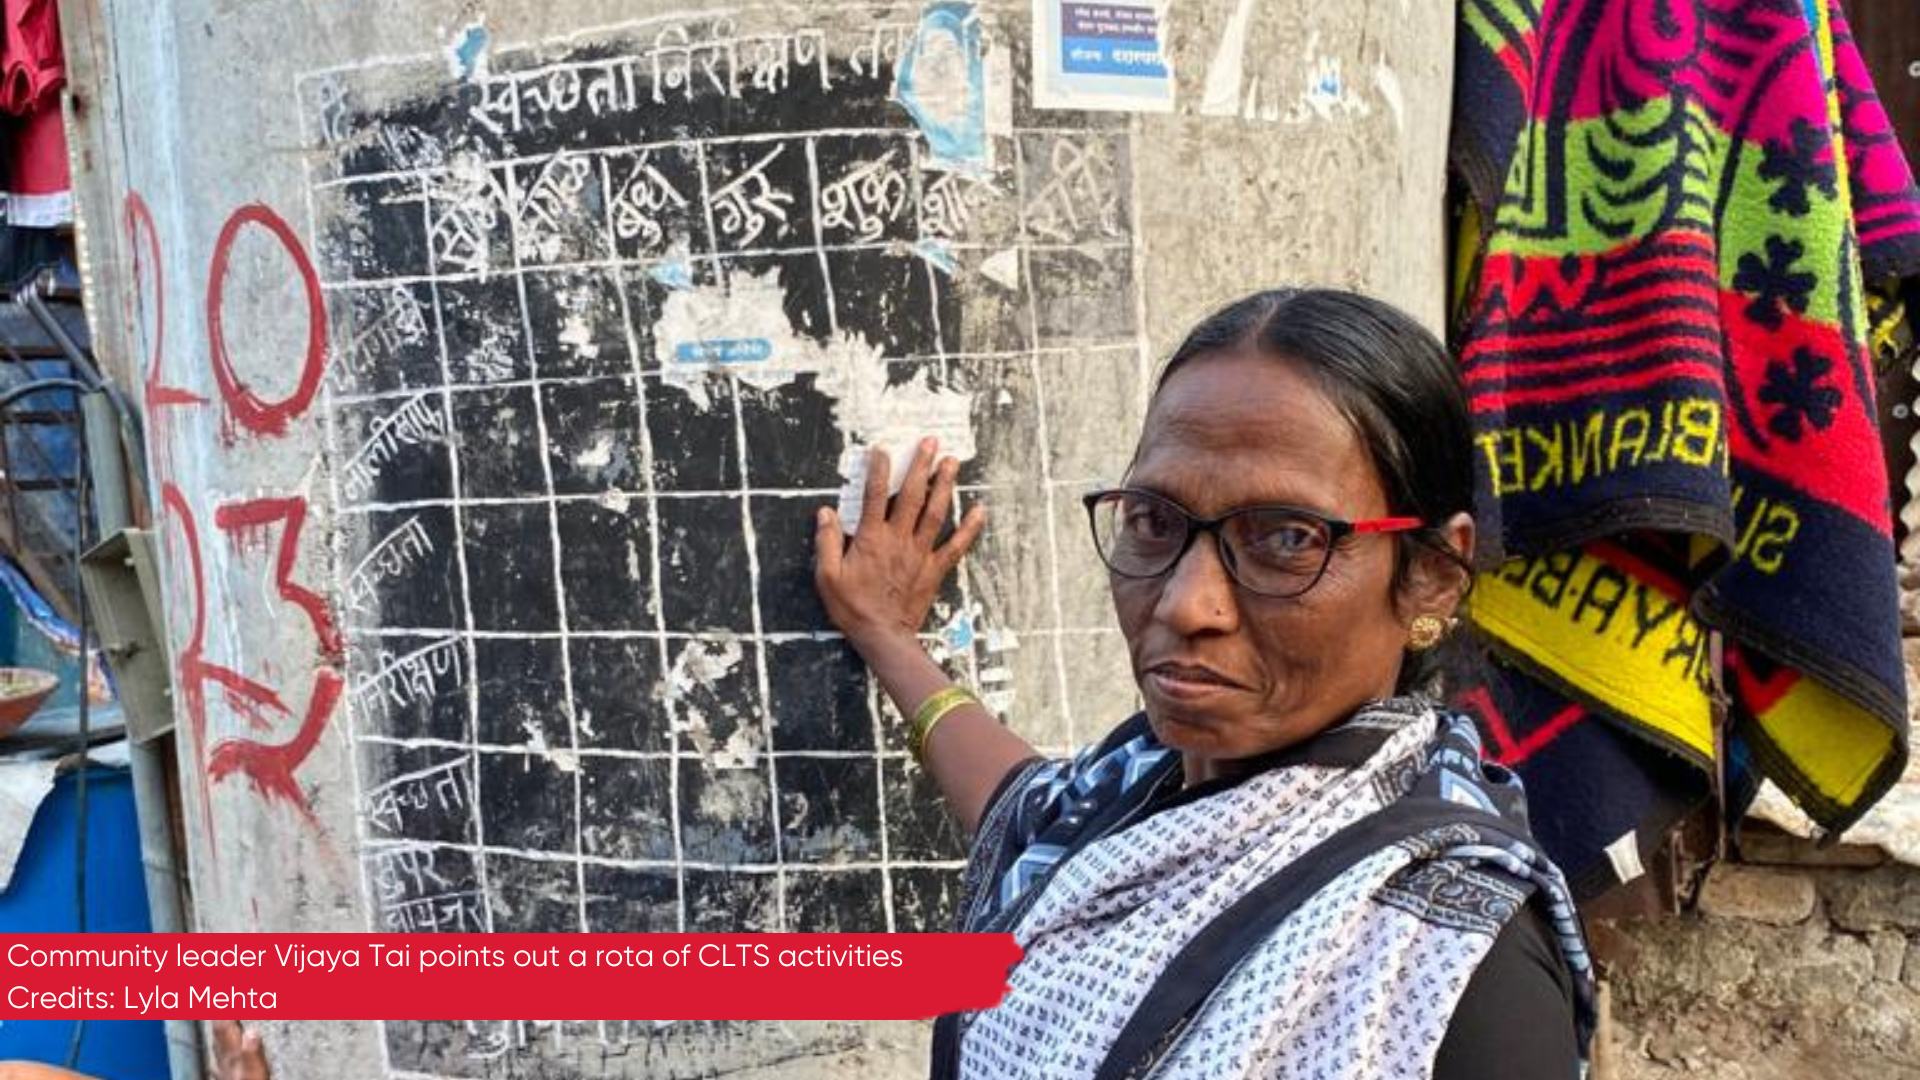 Community leader Vijaya Tai points out rota of activities during community lead sanititation